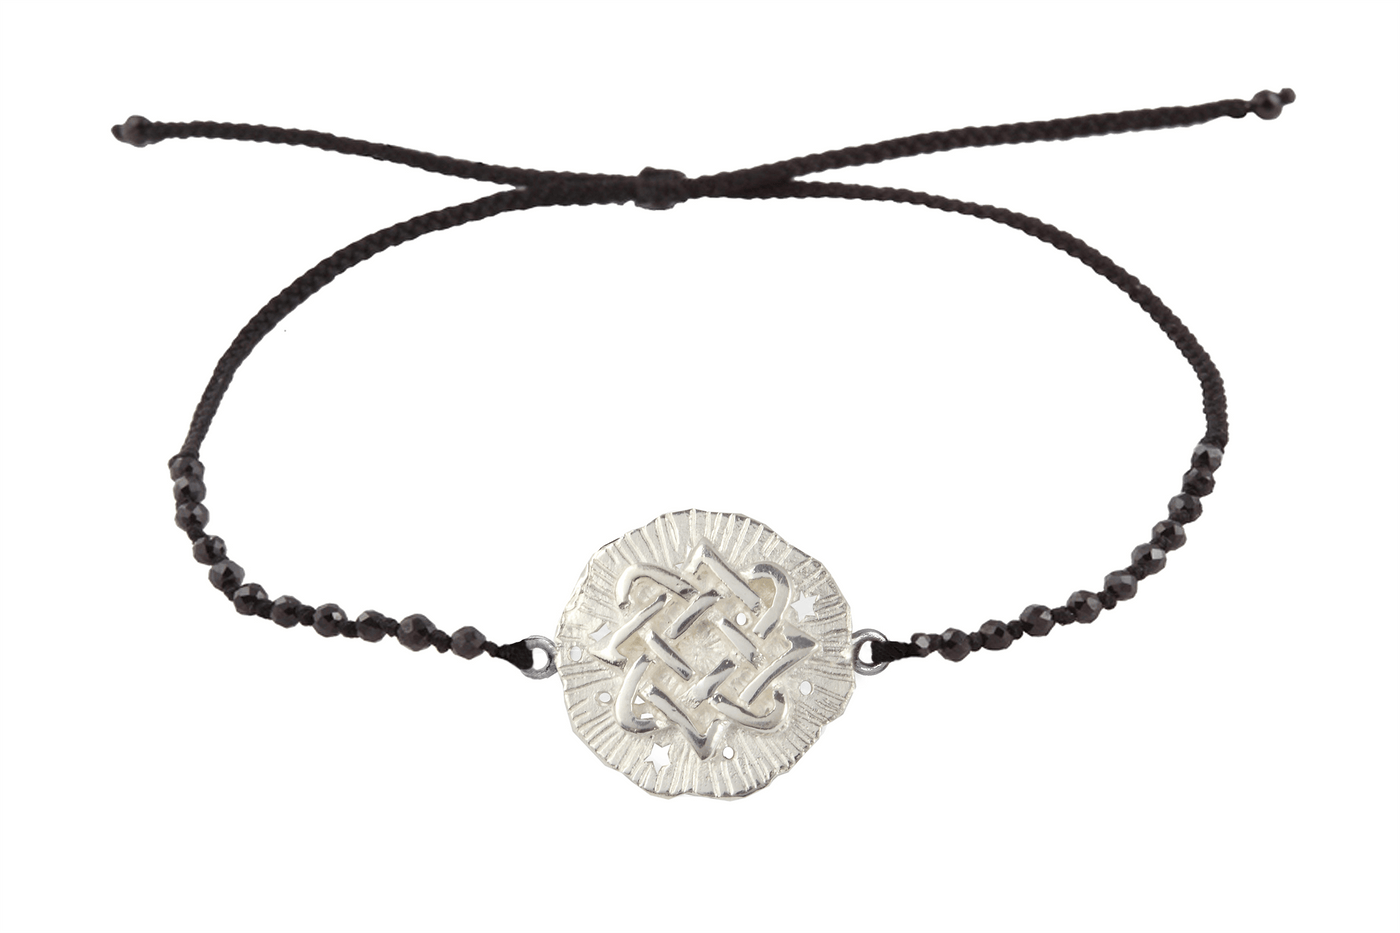 Lada medallion amulet bracelet with beads. Silver